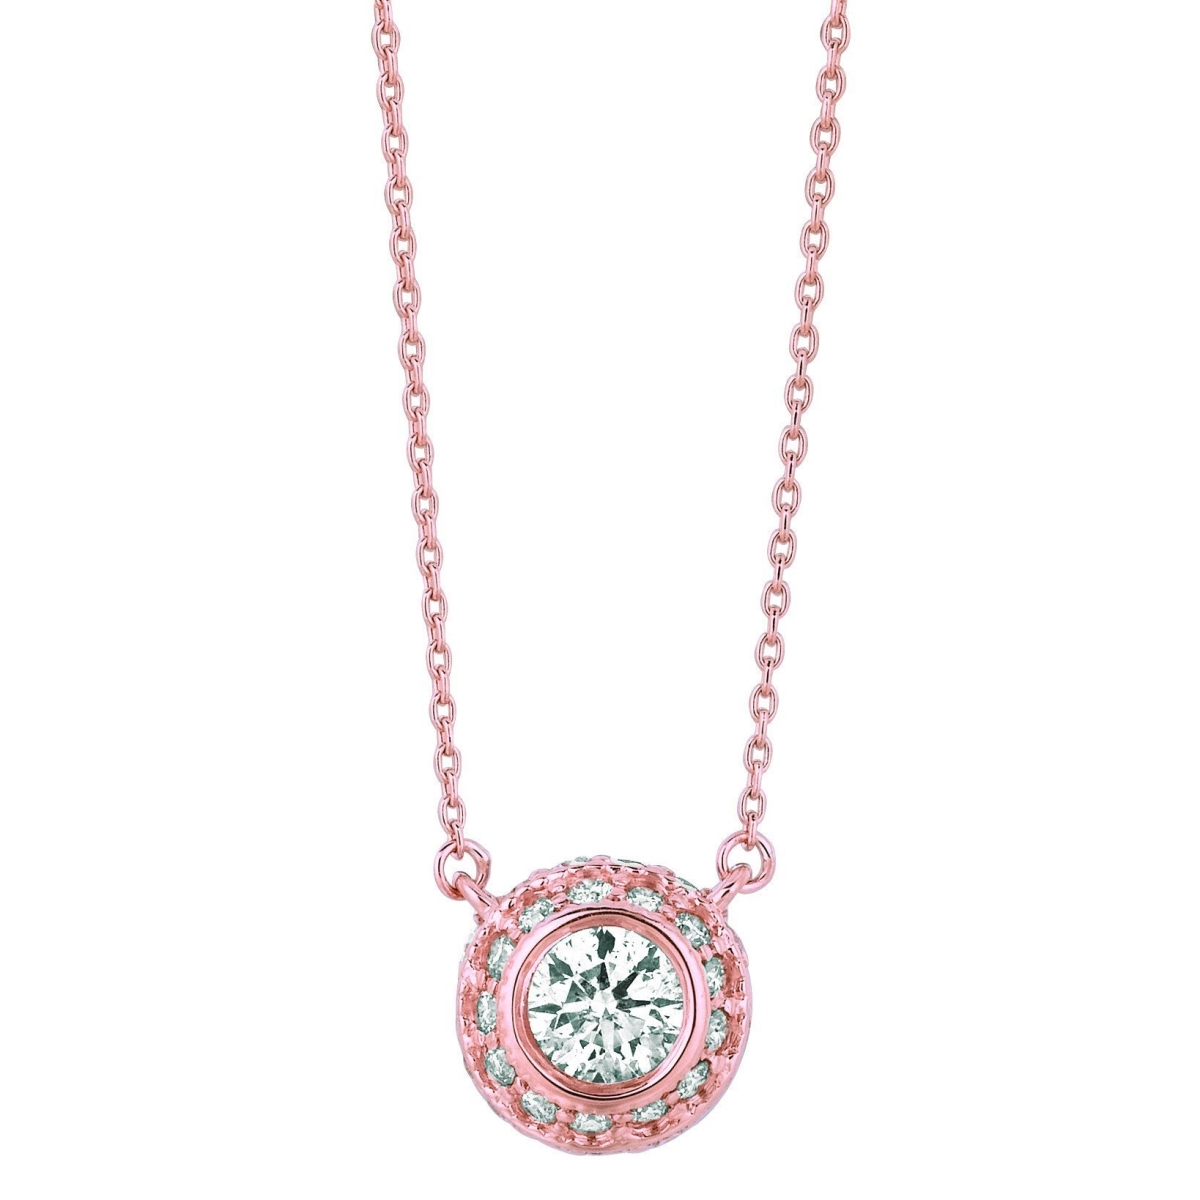 Harry Chad Enterprises 16320 1 CT Diamond Pendant Necklace - 14K Pink